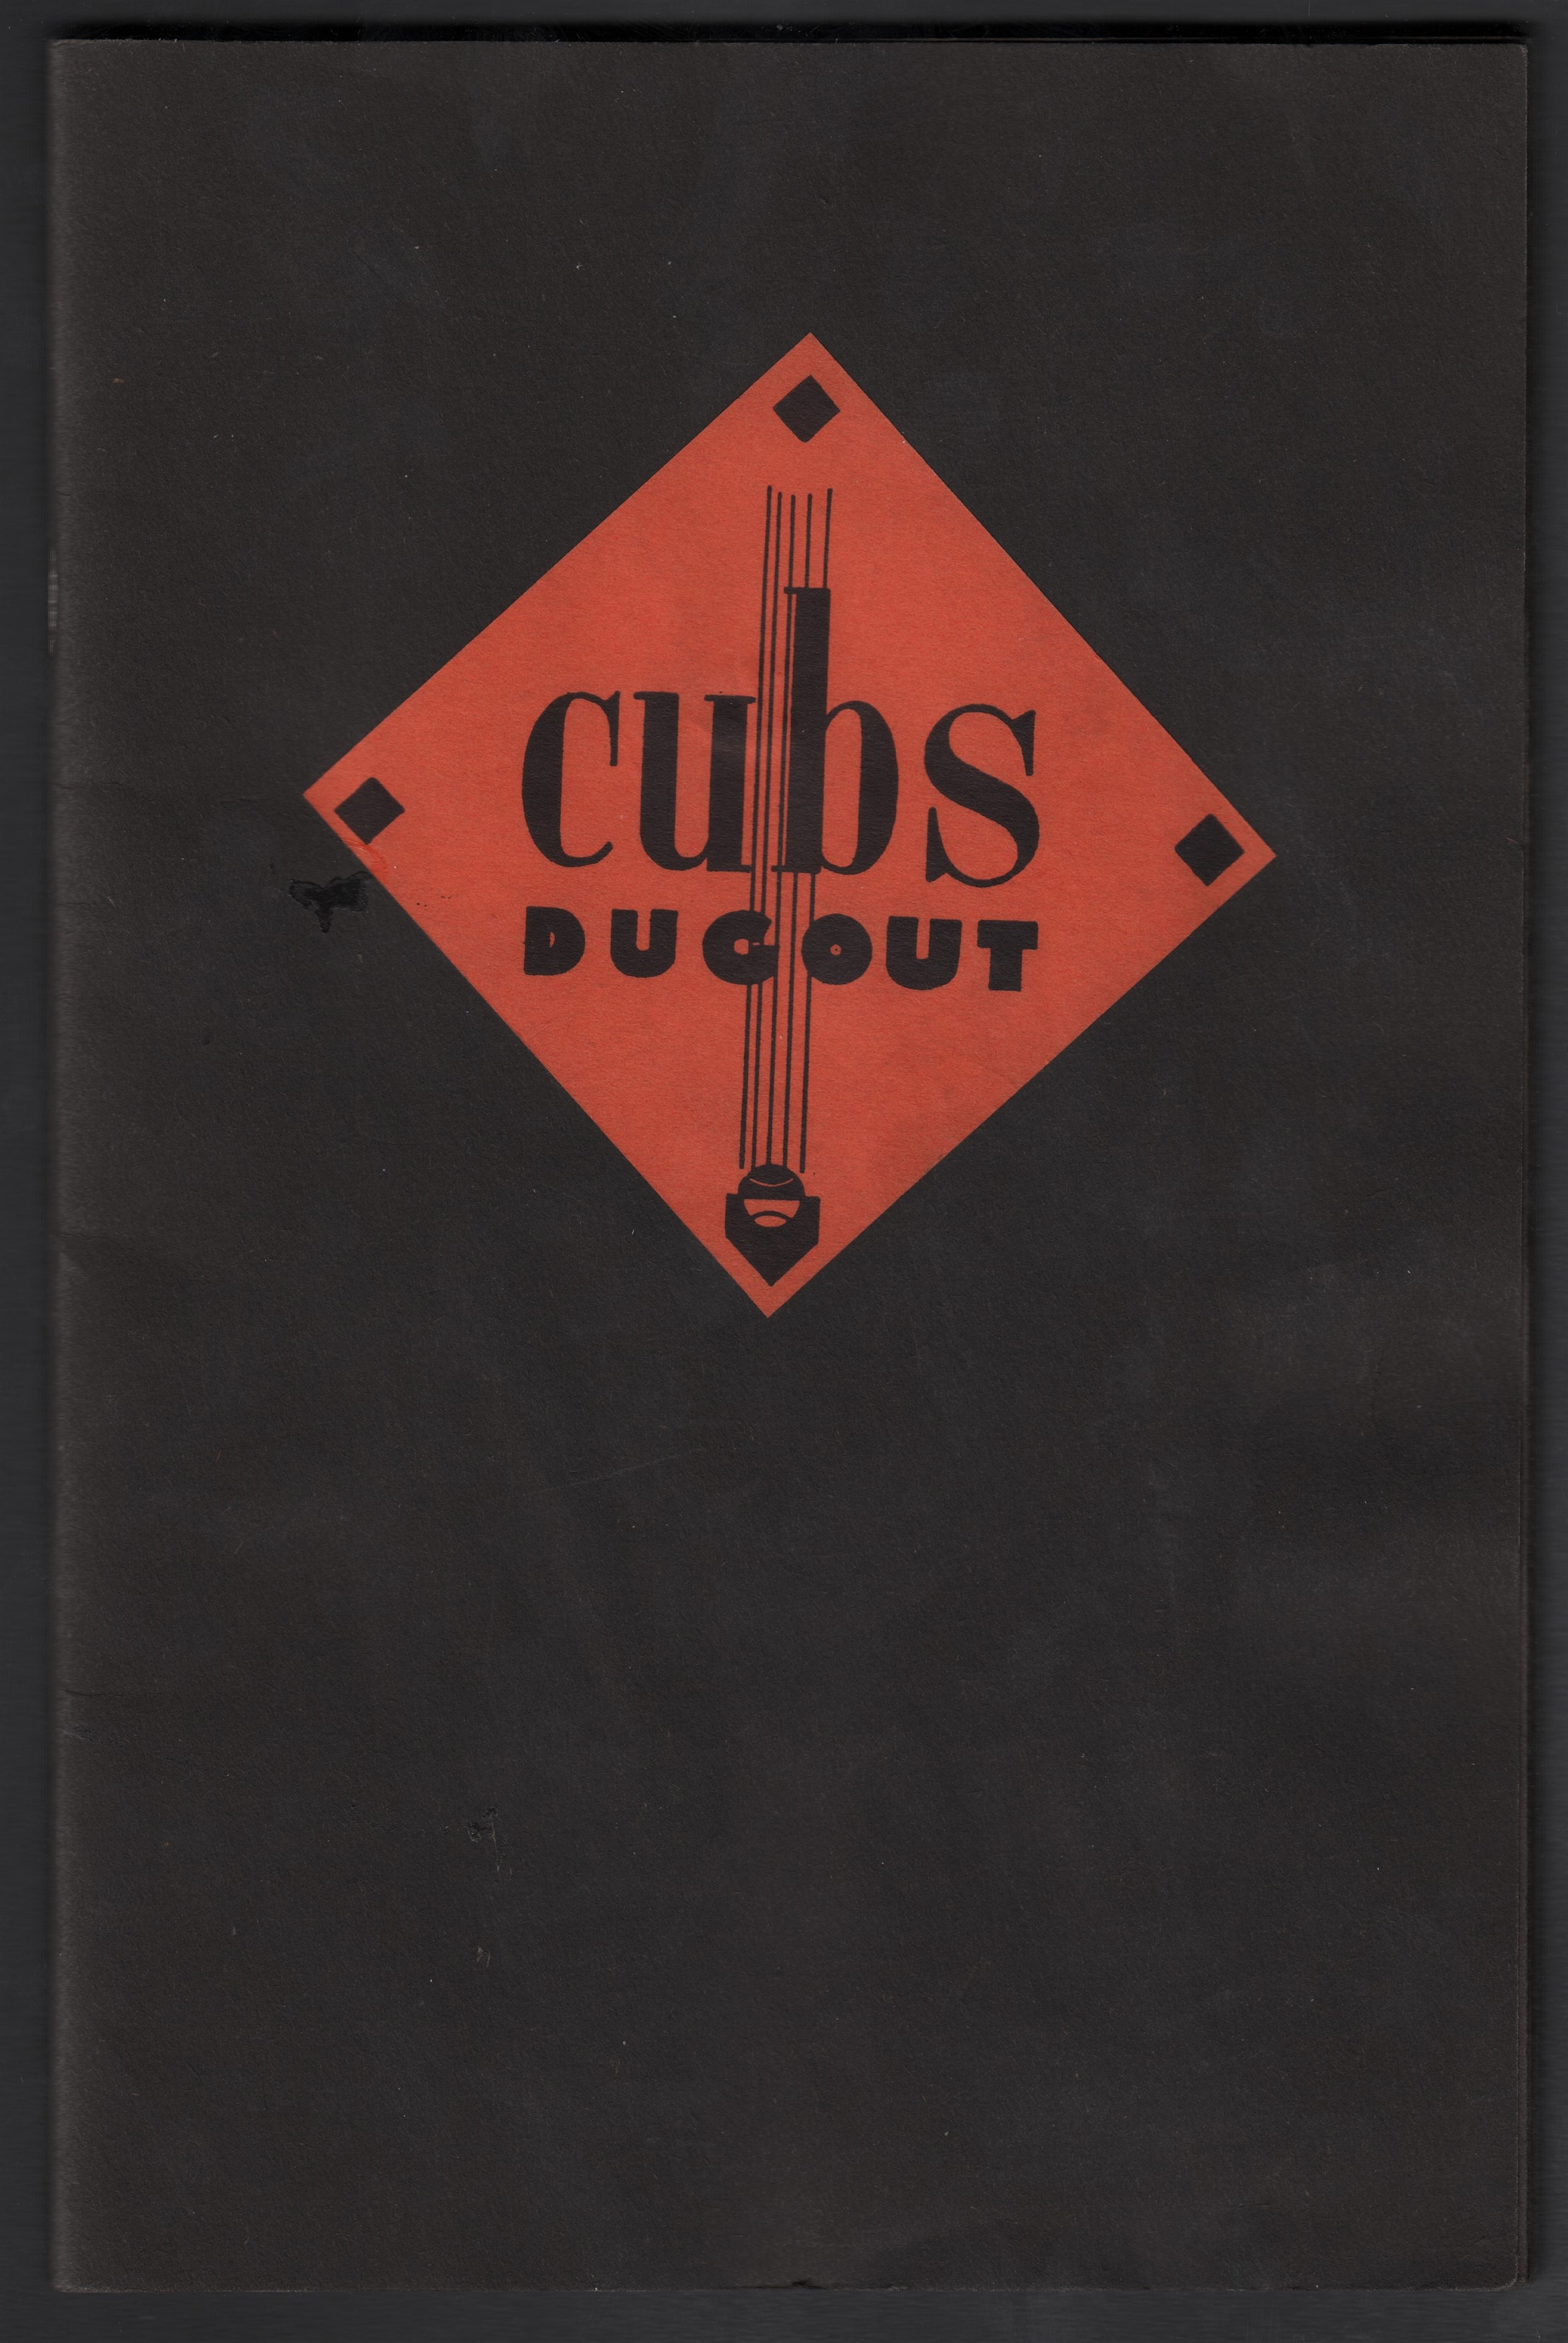 Baseball Memorabilia - 1938 Chicago Cubs Dugout Scrapbook